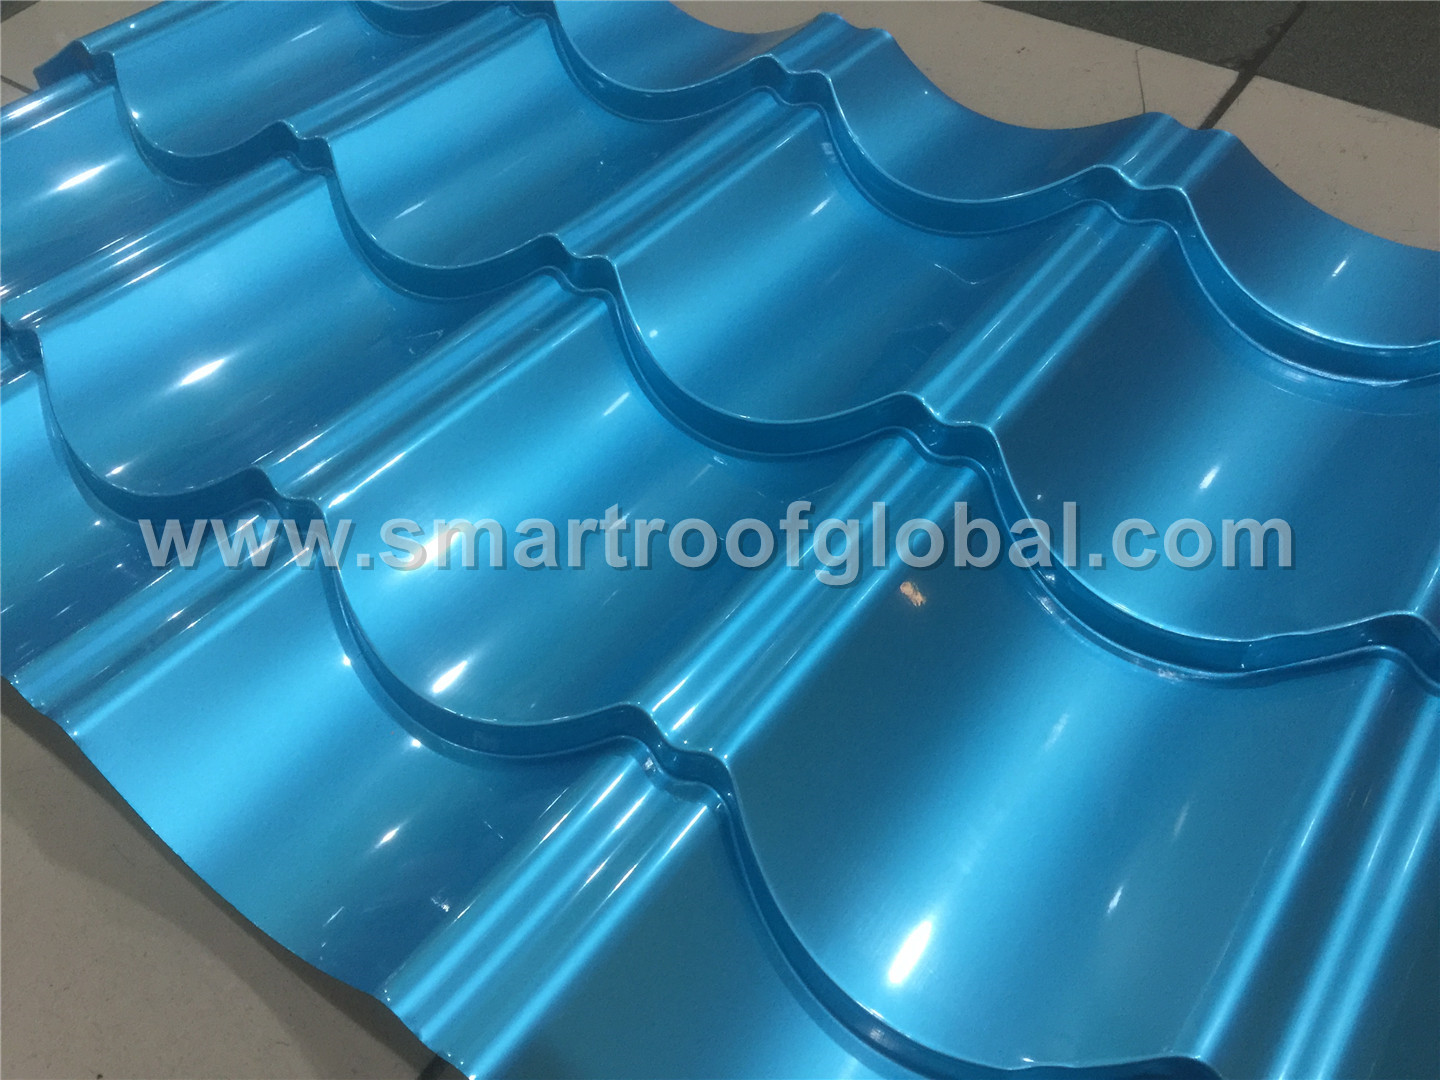 Best Price for Metal Roof Panels - Steel Metal Roofing – Smartroof